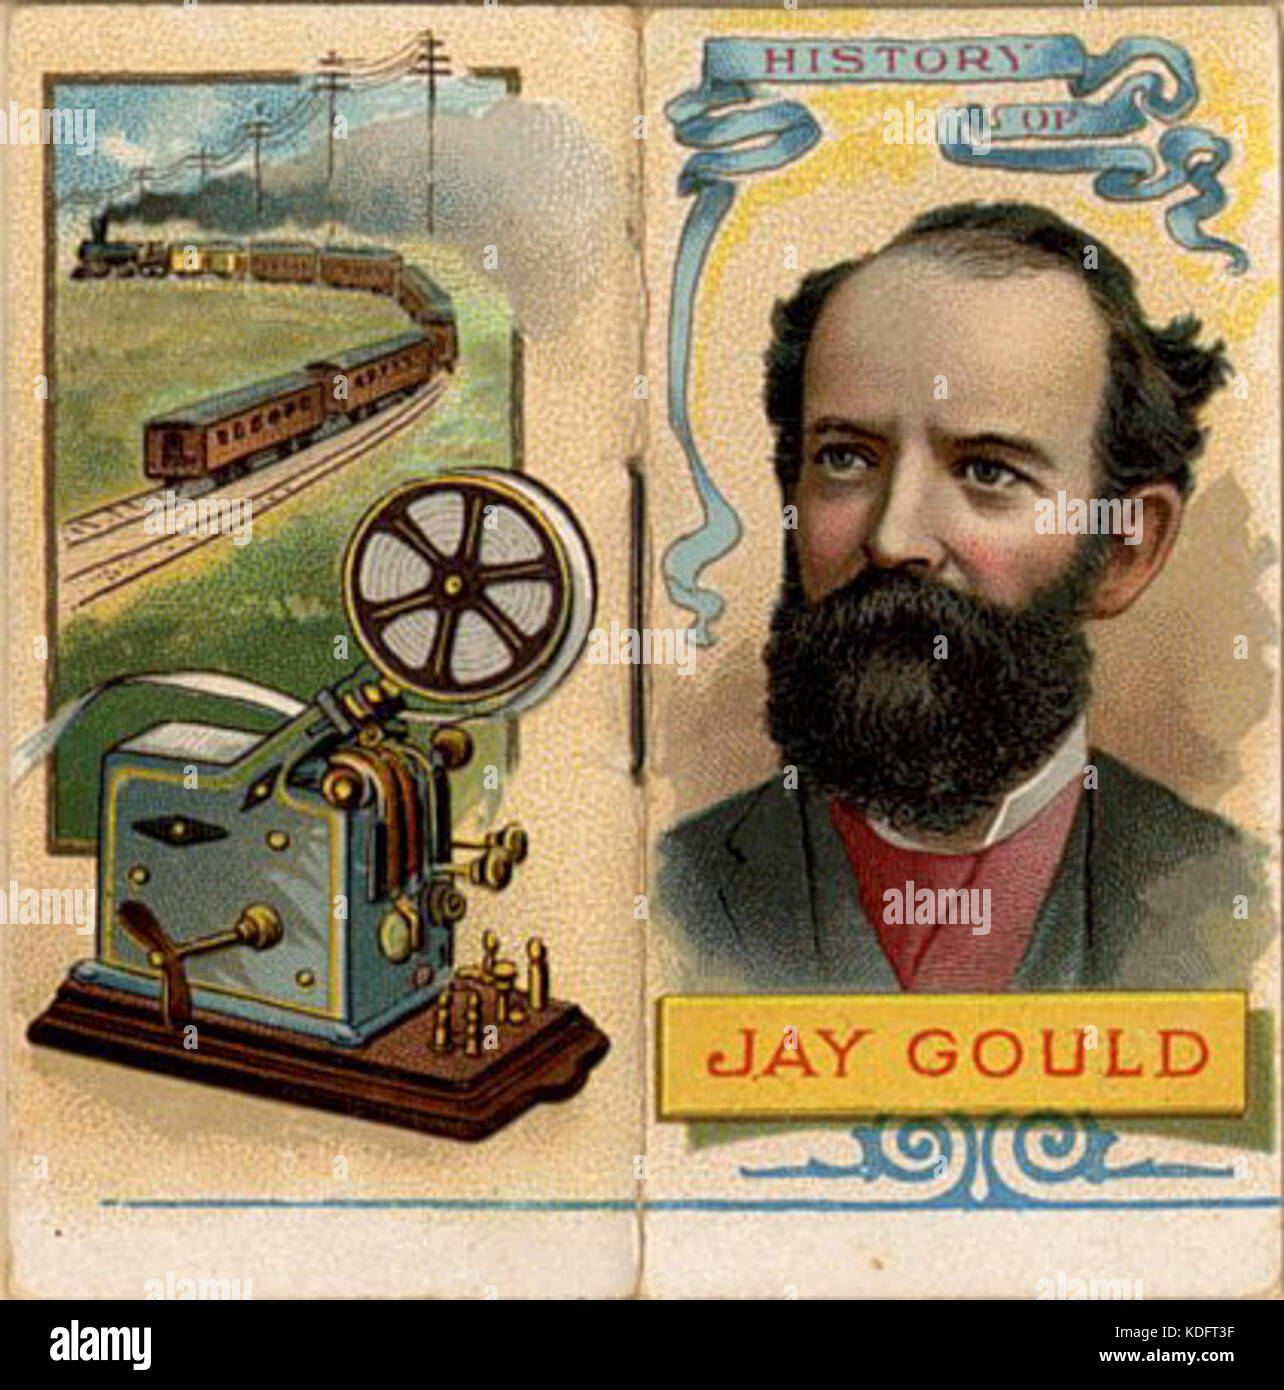 History of jay gould Stock Photo